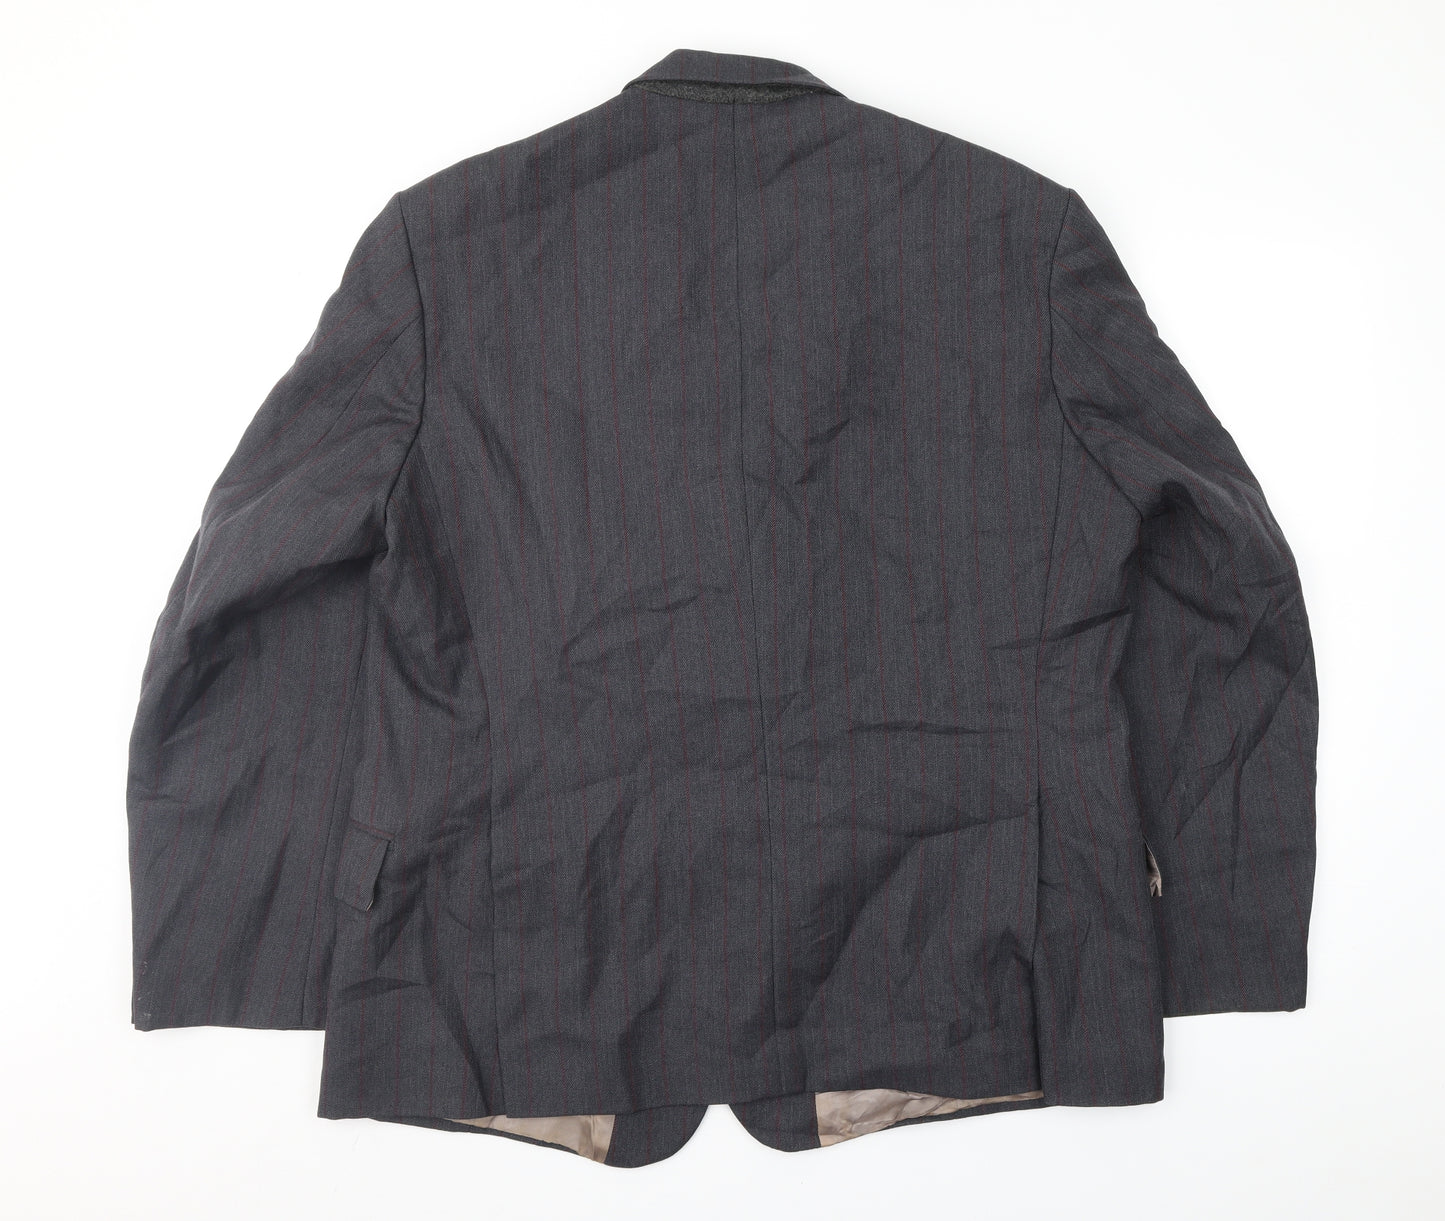 Saxon Mens Grey Striped  Jacket Suit Jacket Size 44